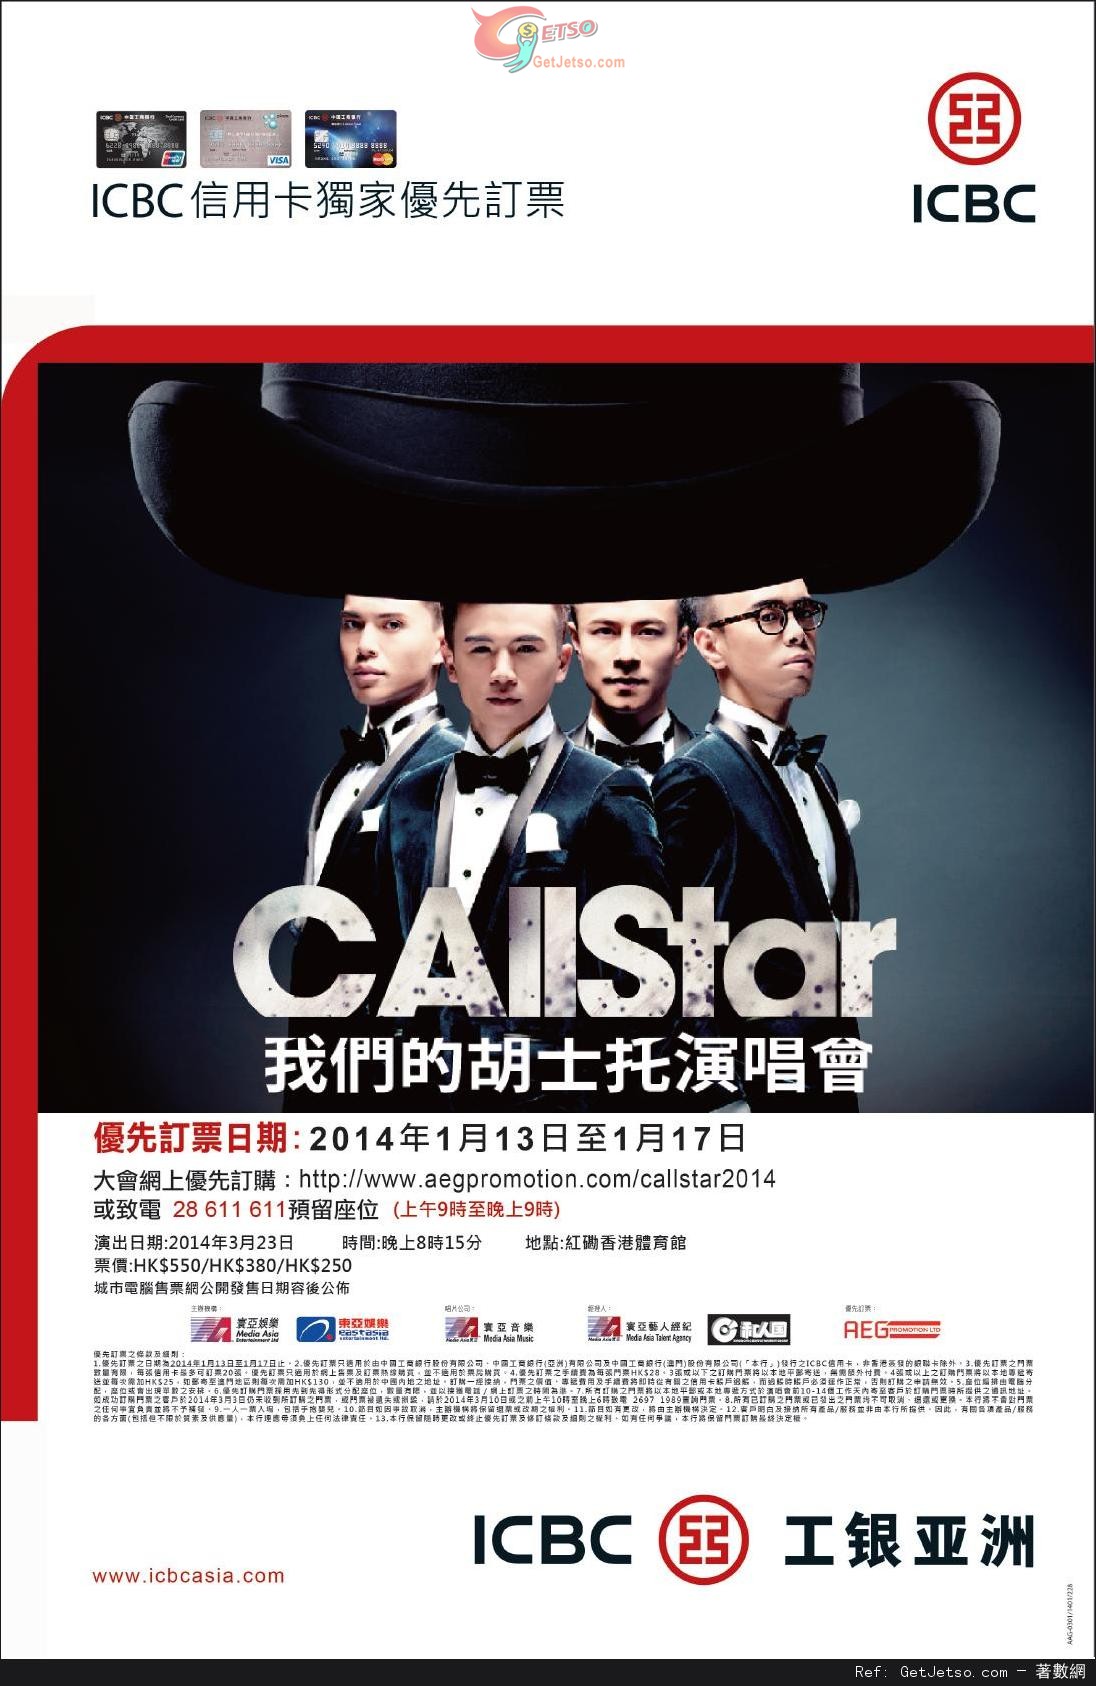 ICBC工銀亞洲信用卡C AllStar 《我們的胡士托》香港演唱會優先訂票優惠(14年1月13-17日)圖片1